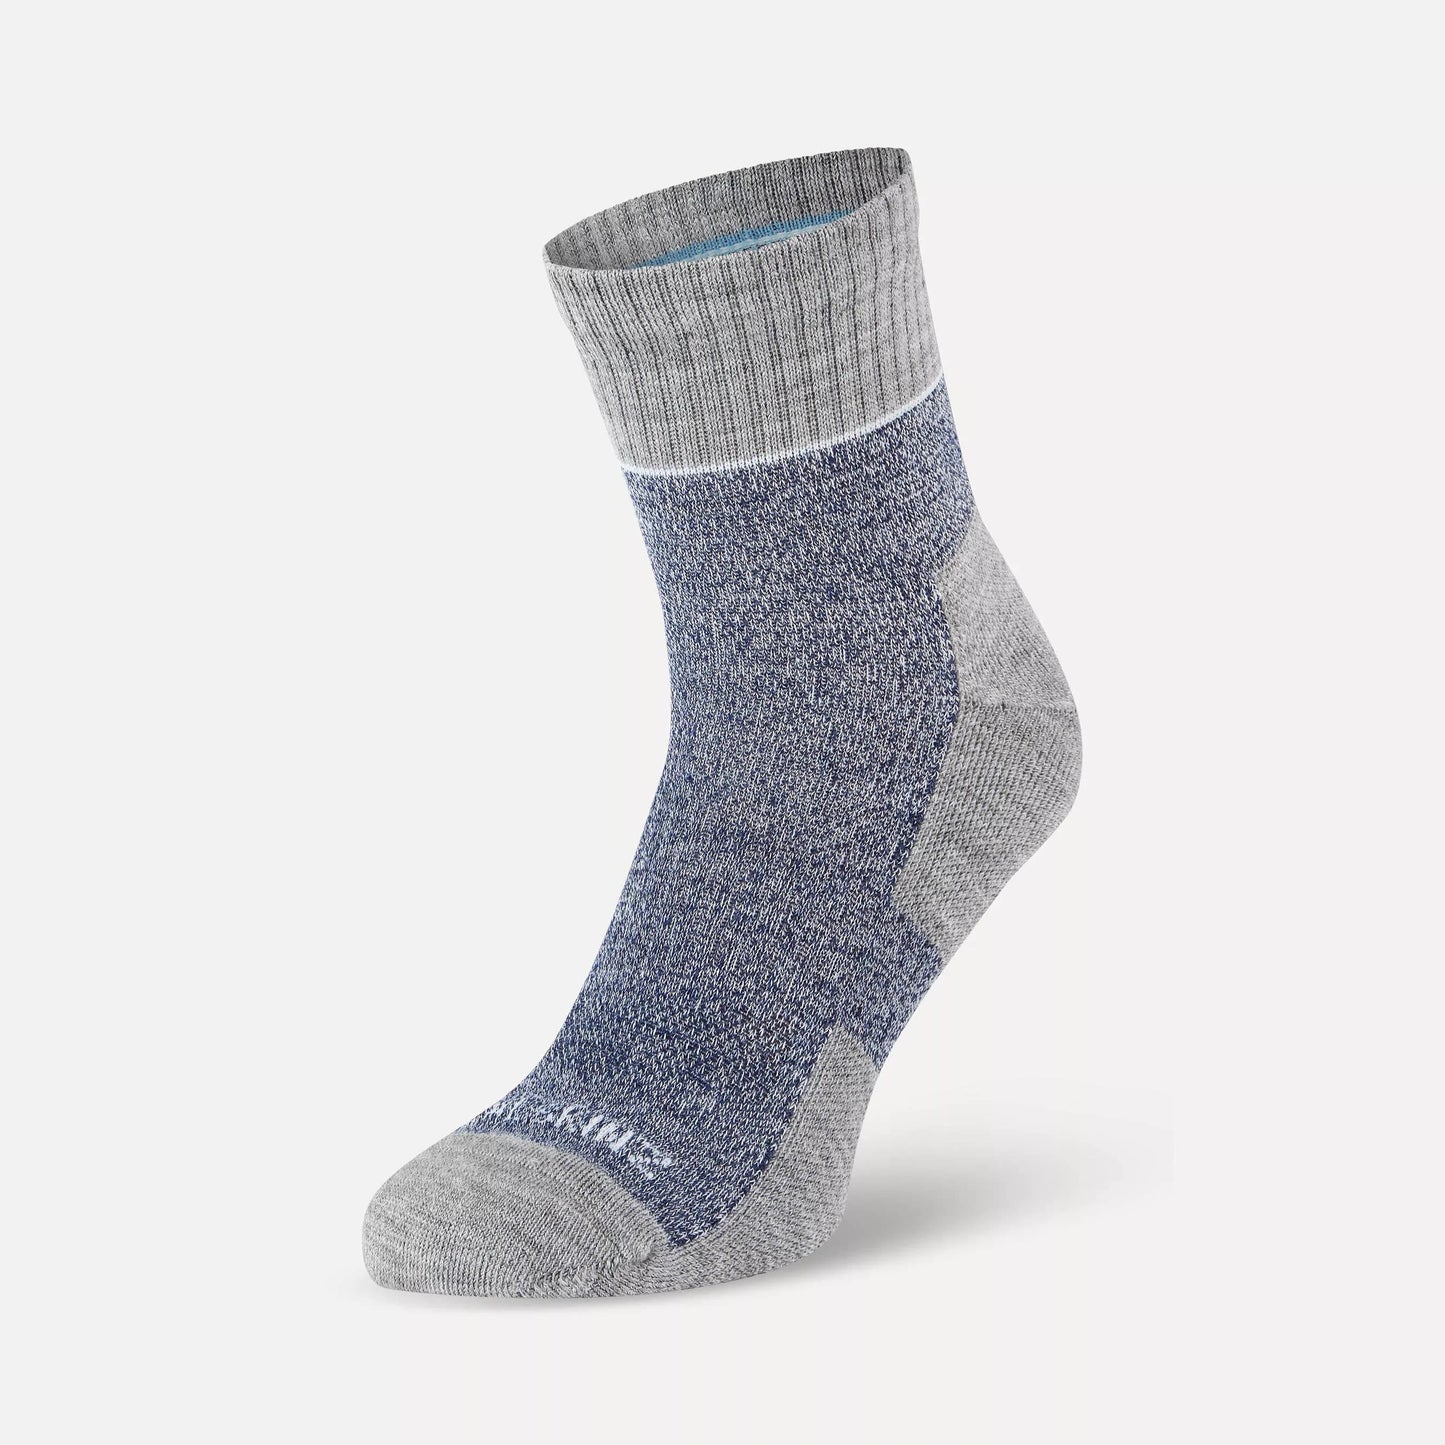 Sealskinz Morston Solo QuickDry Ankle Length Socks